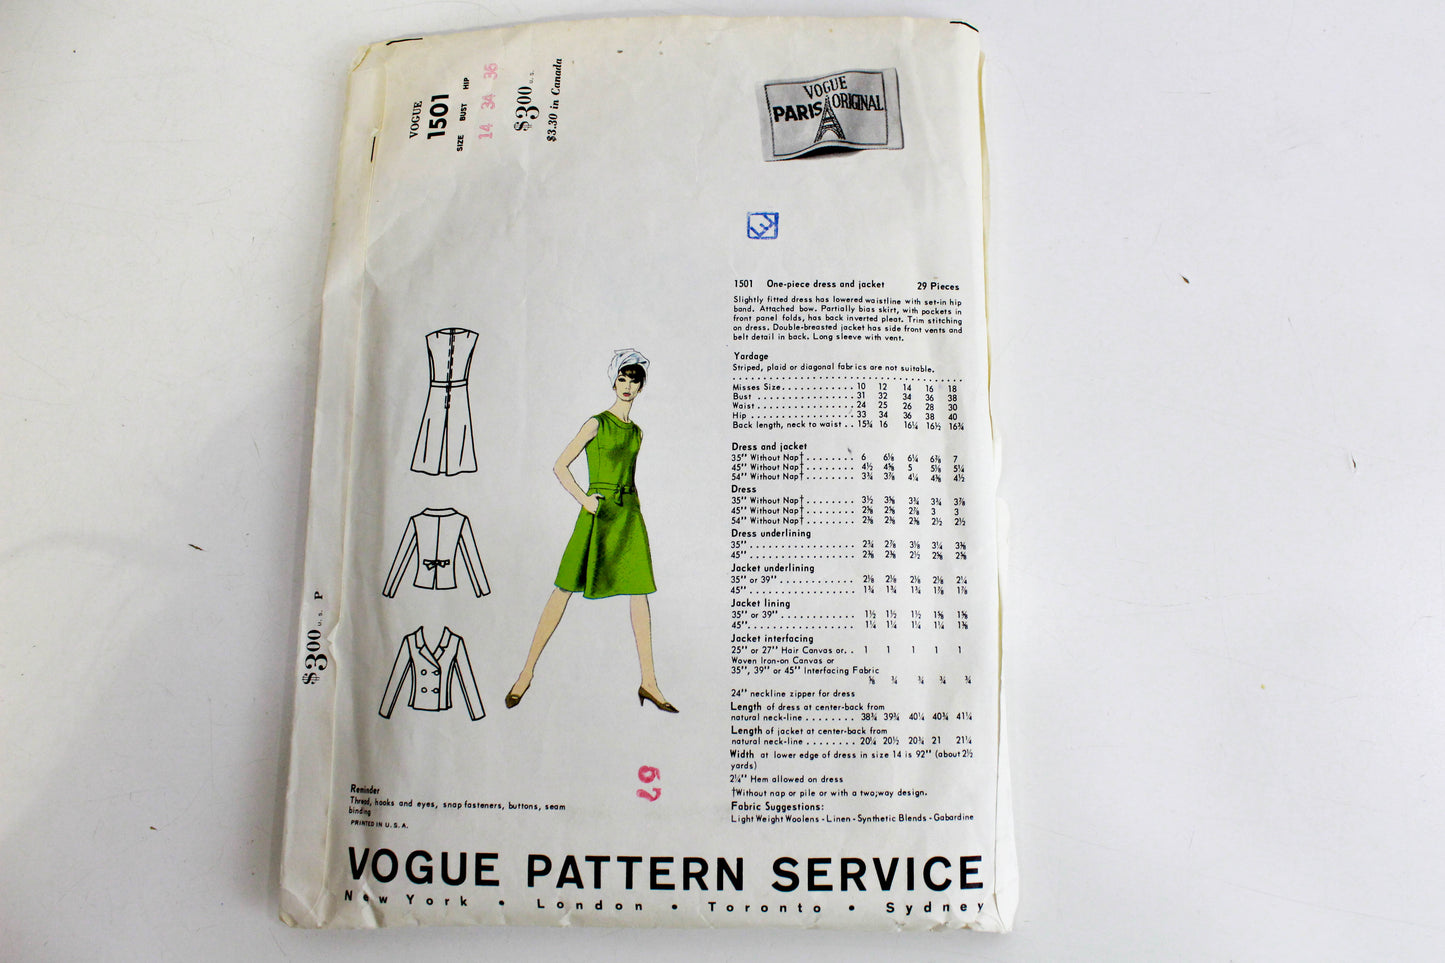 1960s Vogue Paris Original 1501 Nina Ricci Sewing Pattern, Dress and Jacket Set, Complete Bust 34